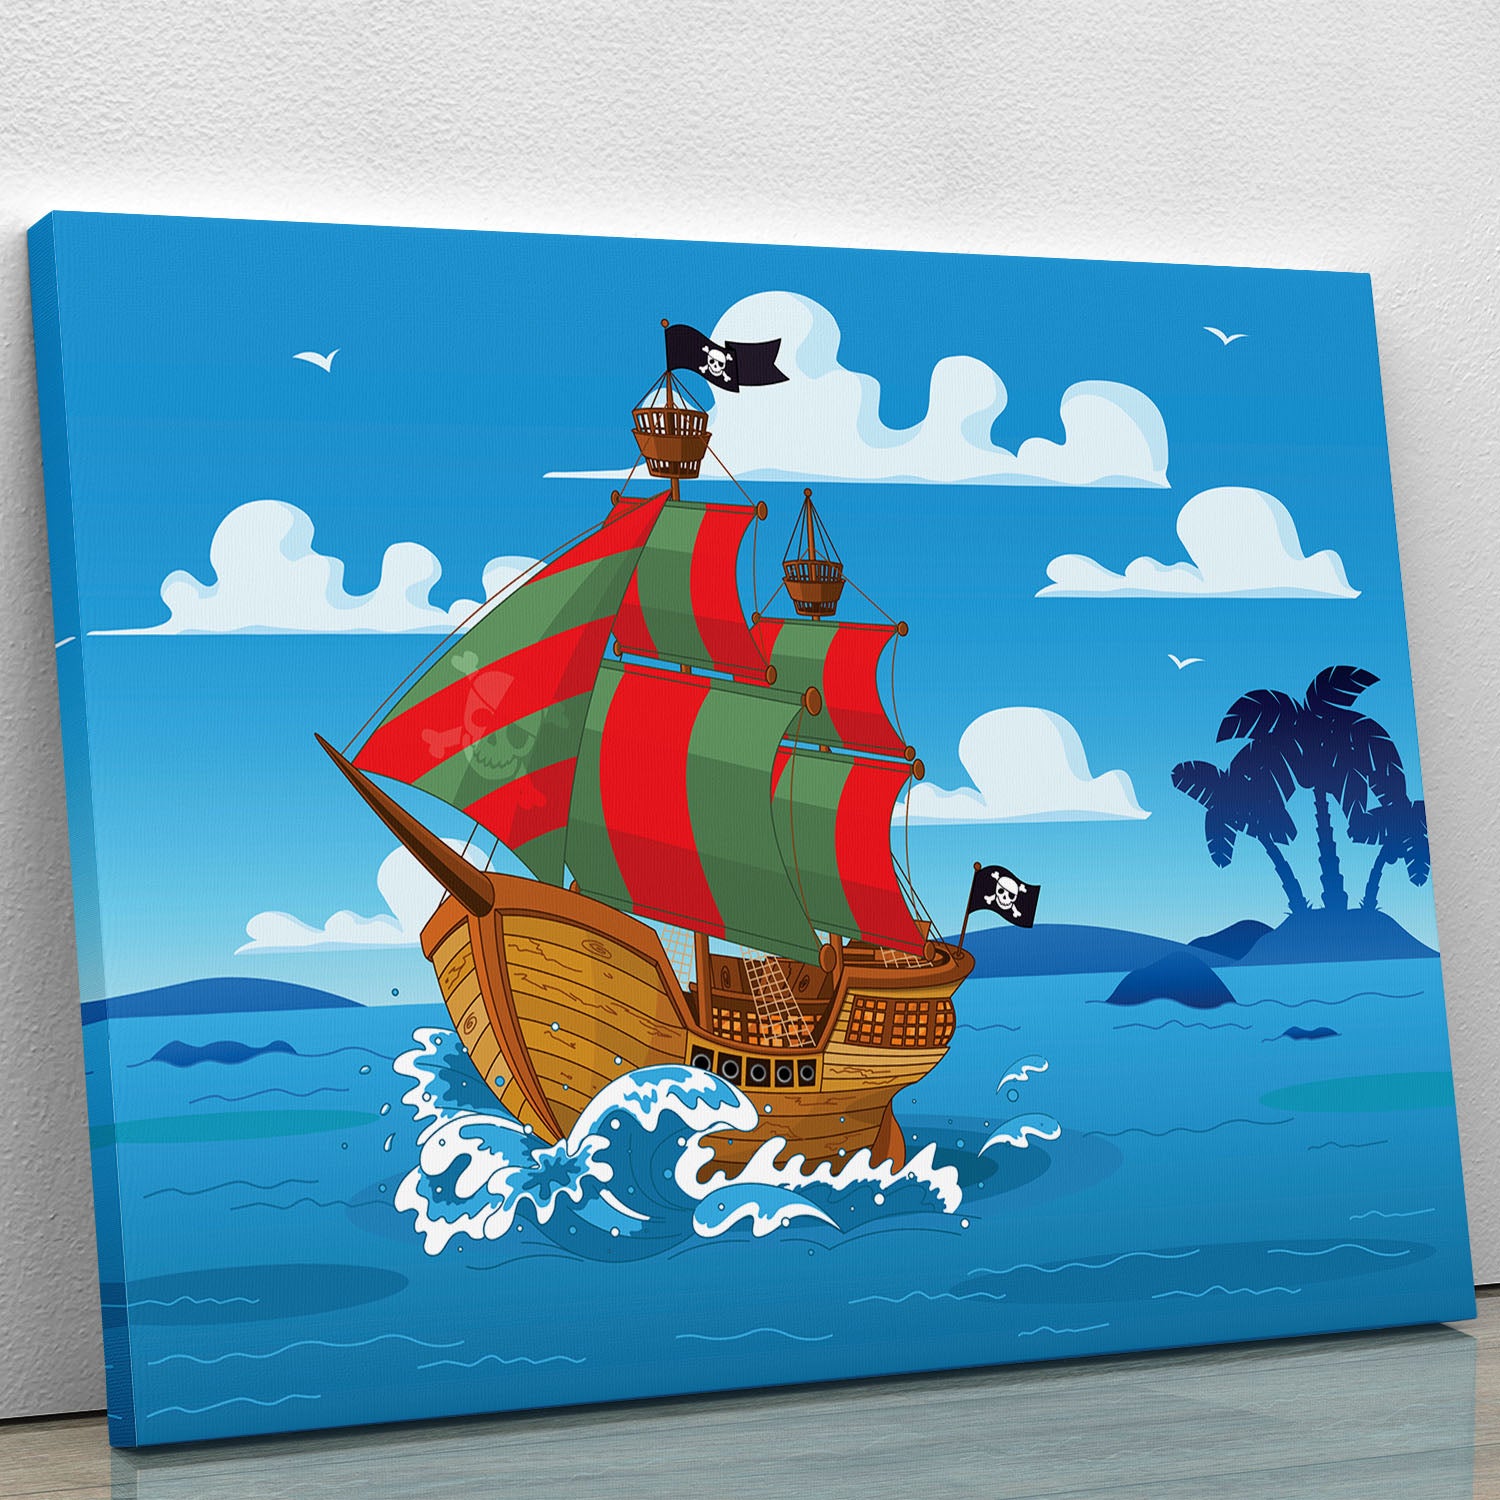 Pirate ship sails the seas Canvas Print or Poster - Canvas Art Rocks - 1